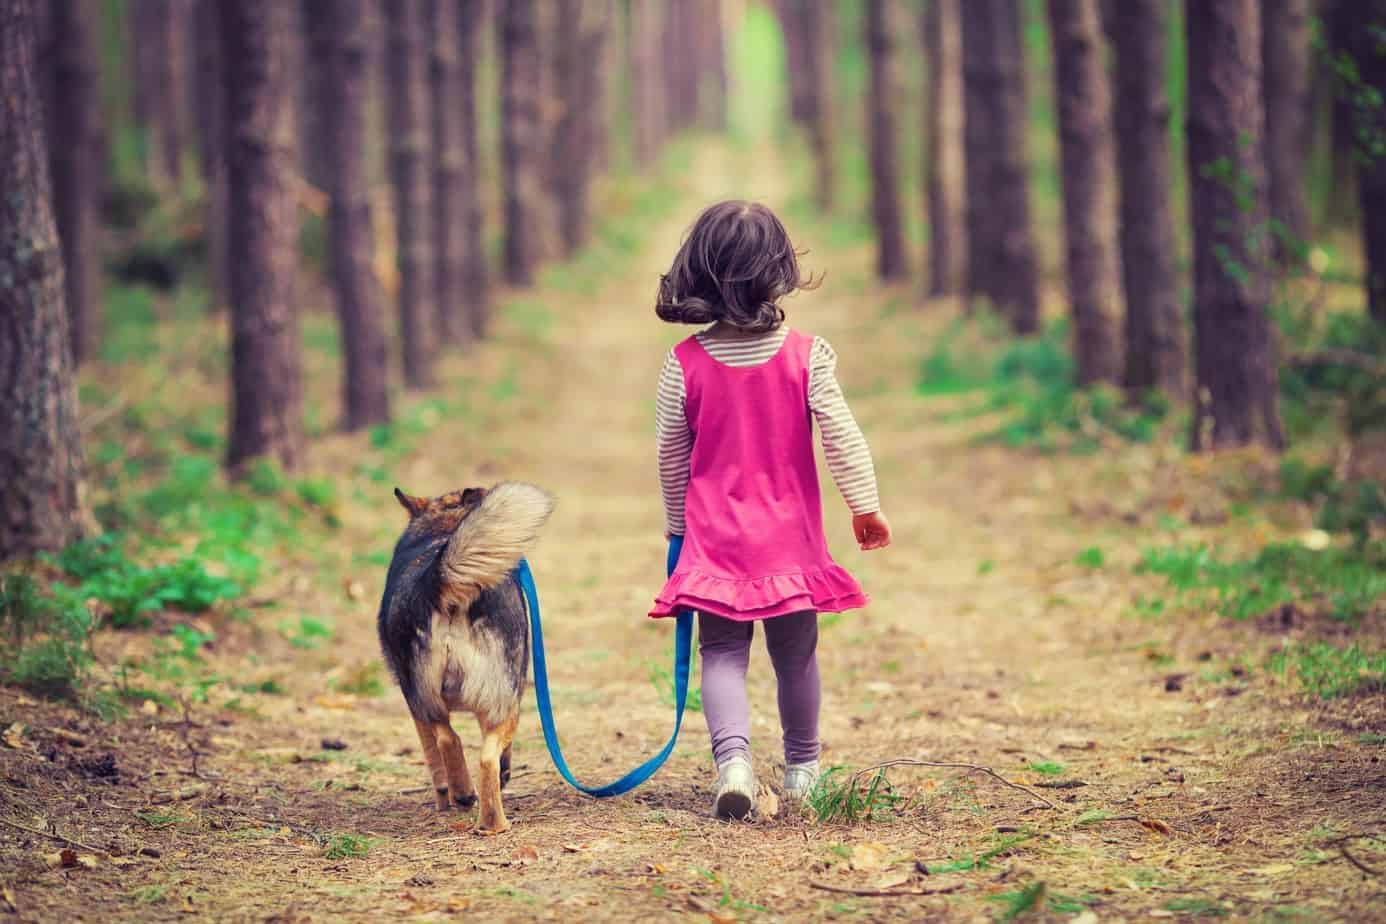 https://dogsbestlife.com/wp-content/uploads/2018/05/dogs-provide-health-benefits-for-children_activity.jpeg